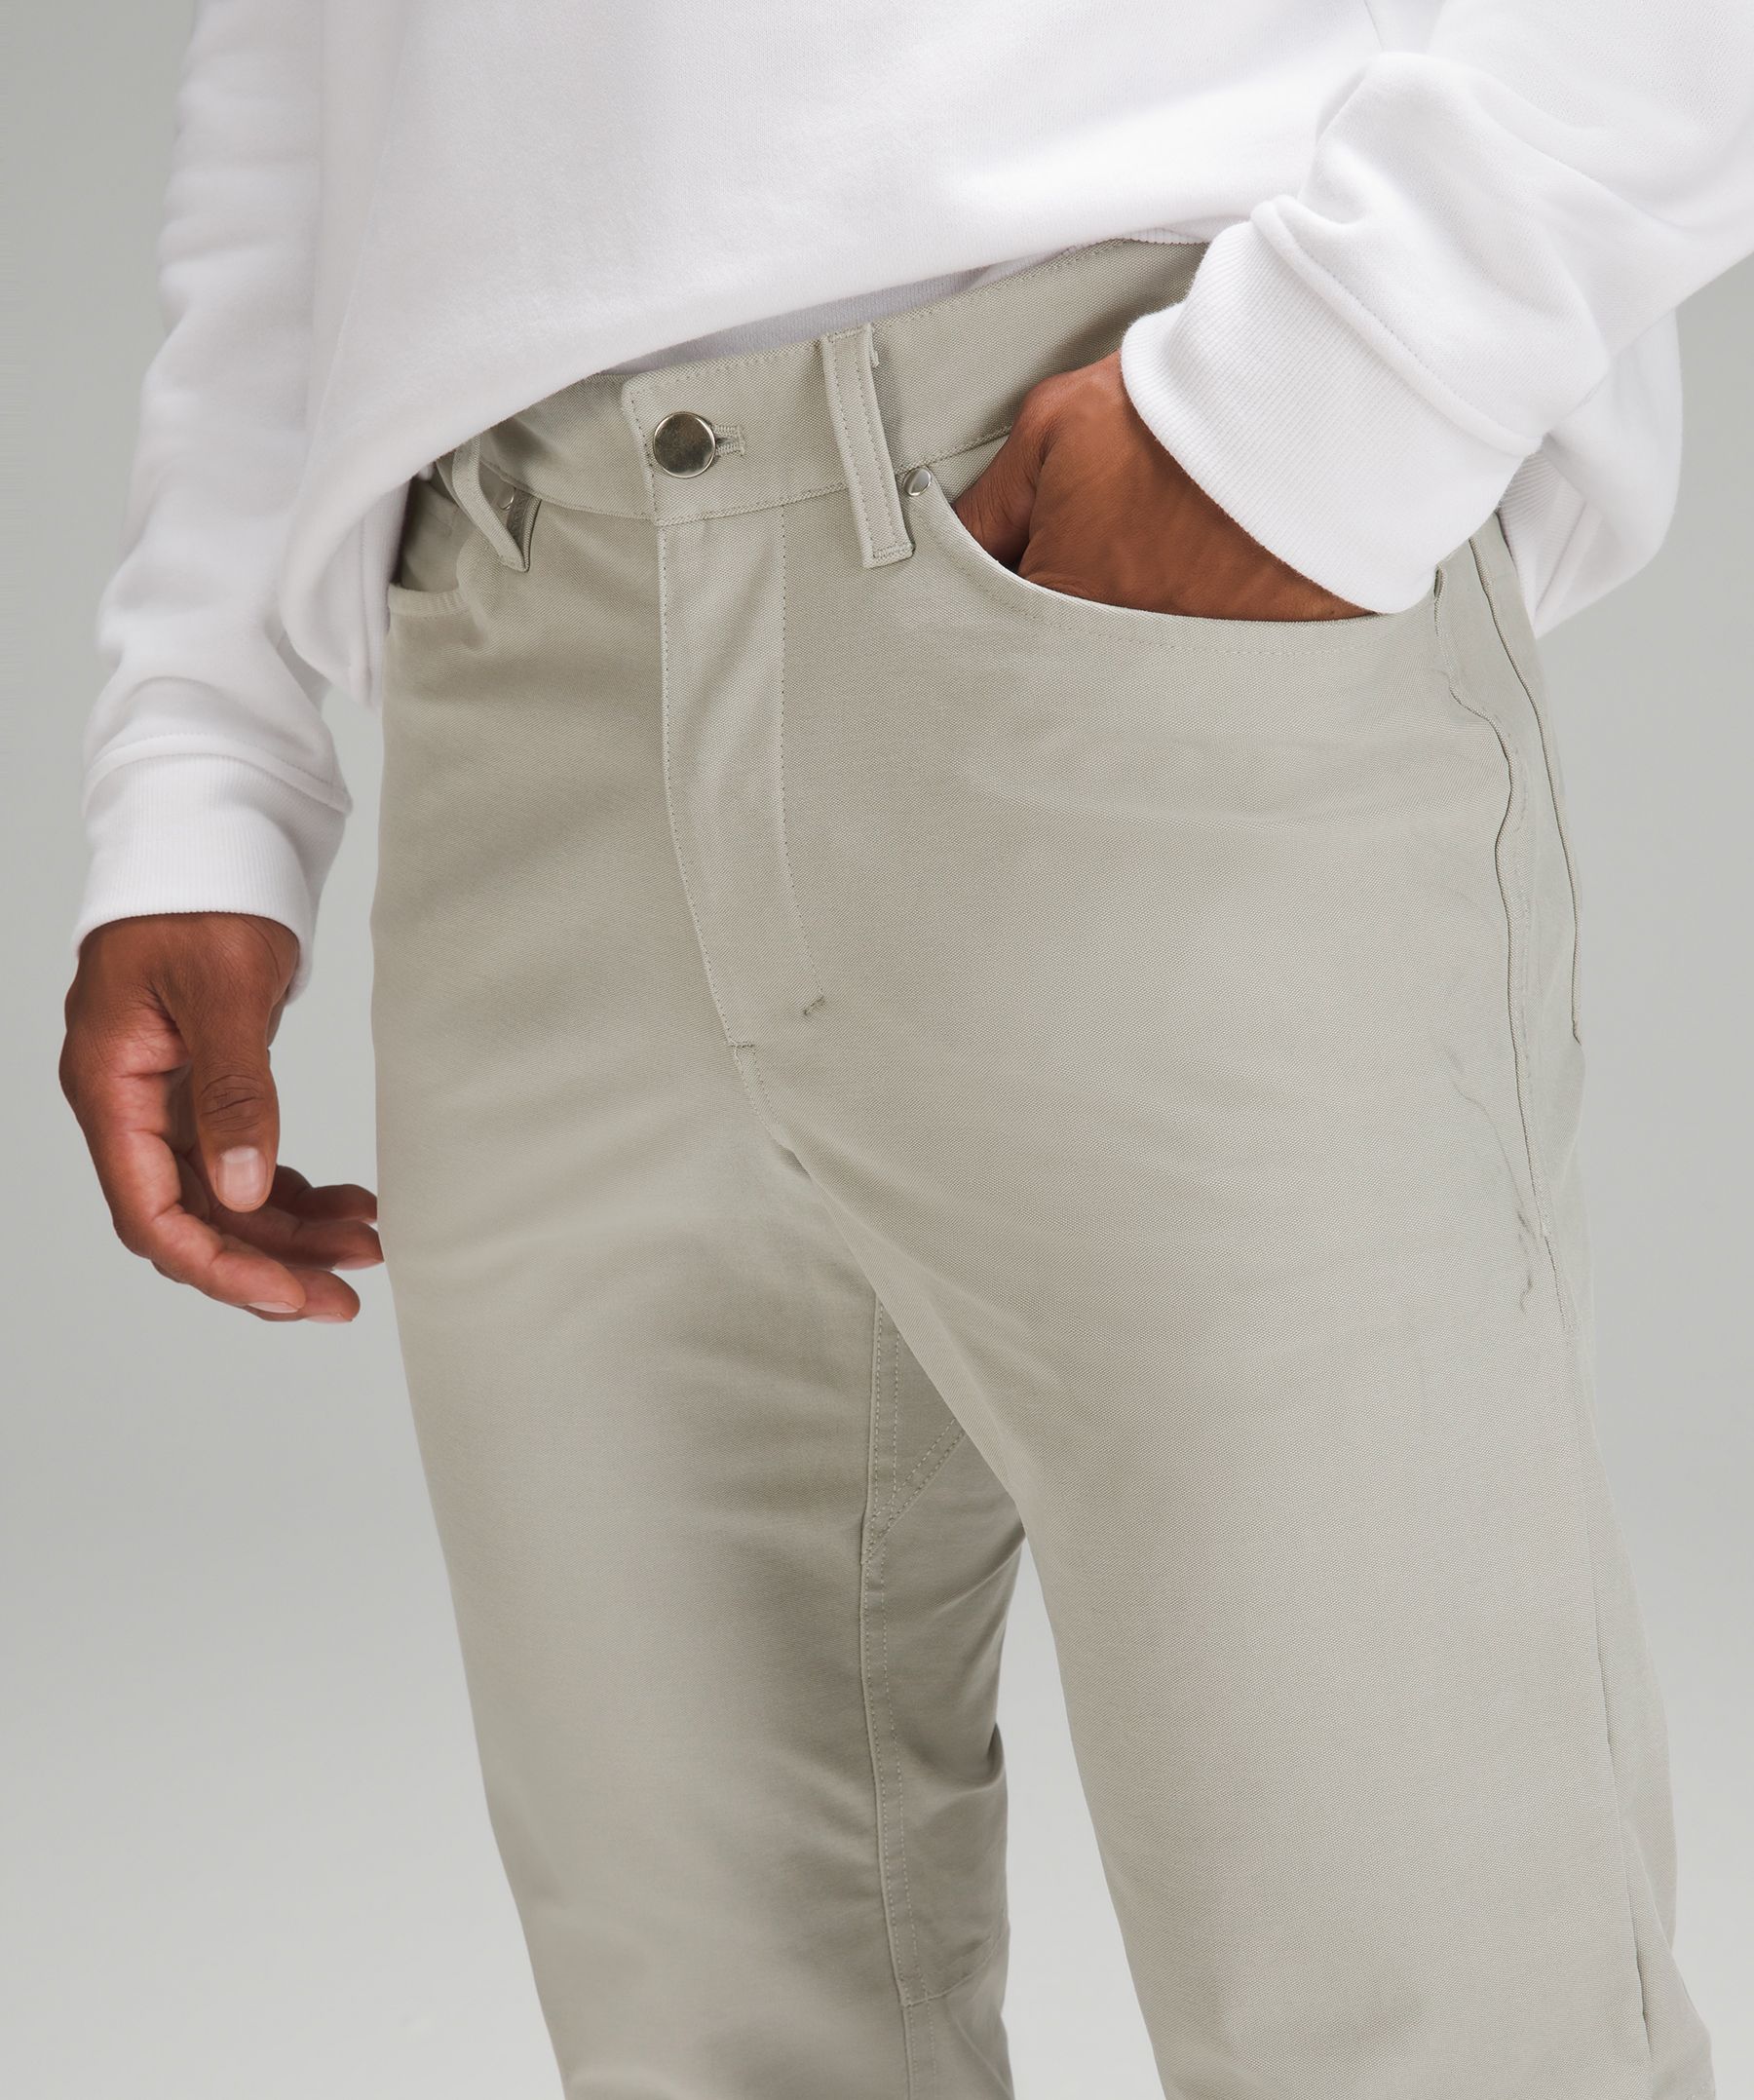 Men's Lululemon ABC Slim Fit Utilitech Pants 31x30 - Helia Beer Co